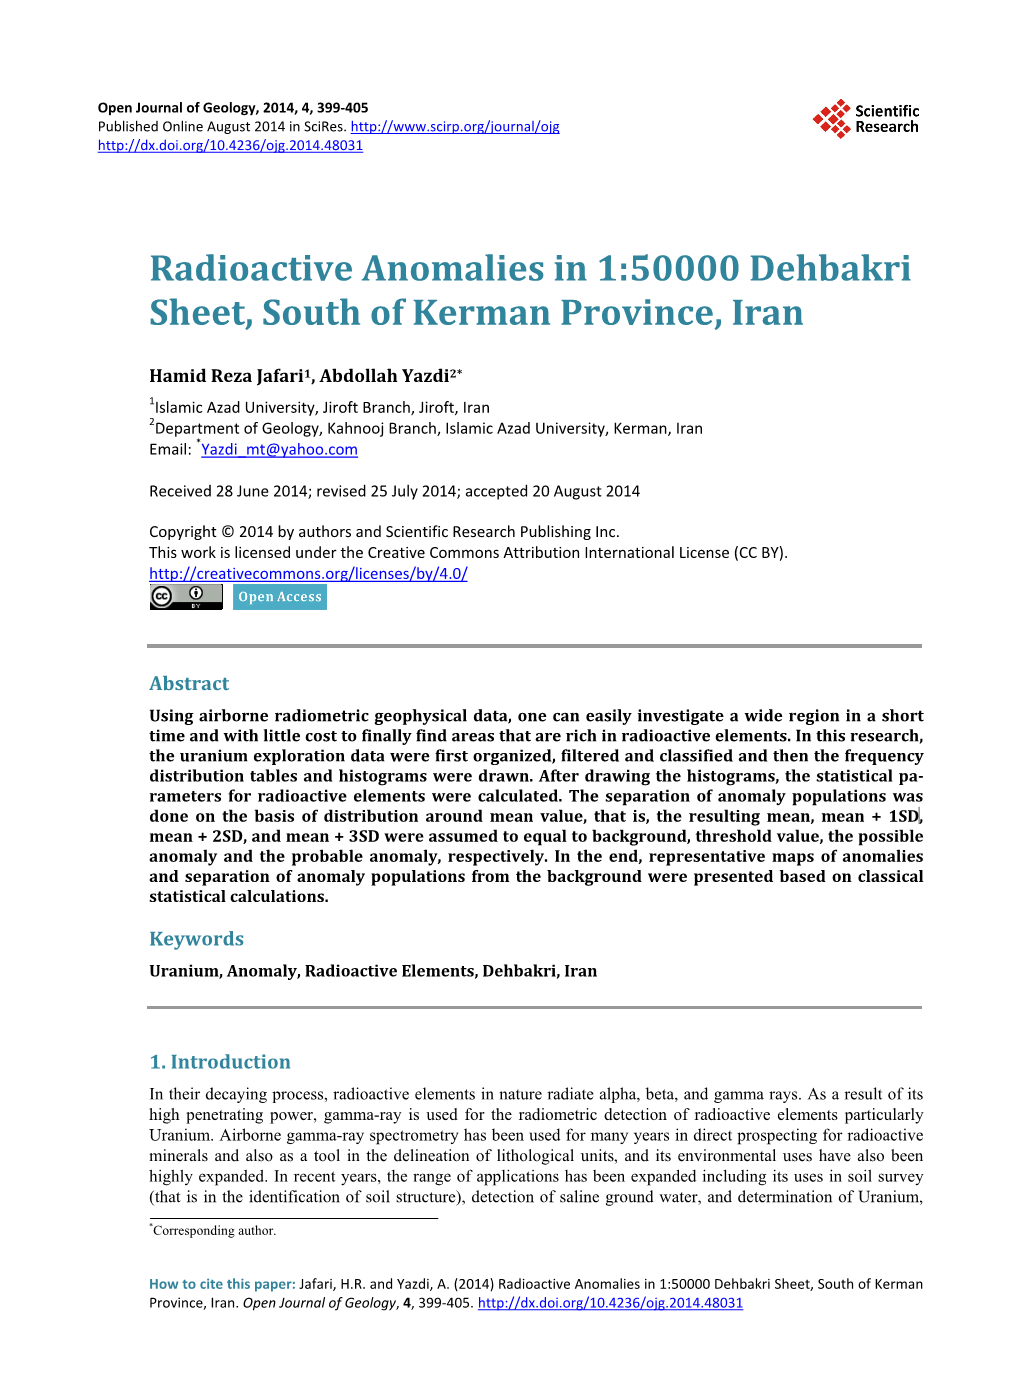 Radioactive Anomalies in 1:50000 Dehbakri Sheet, South of Kerman Province, Iran